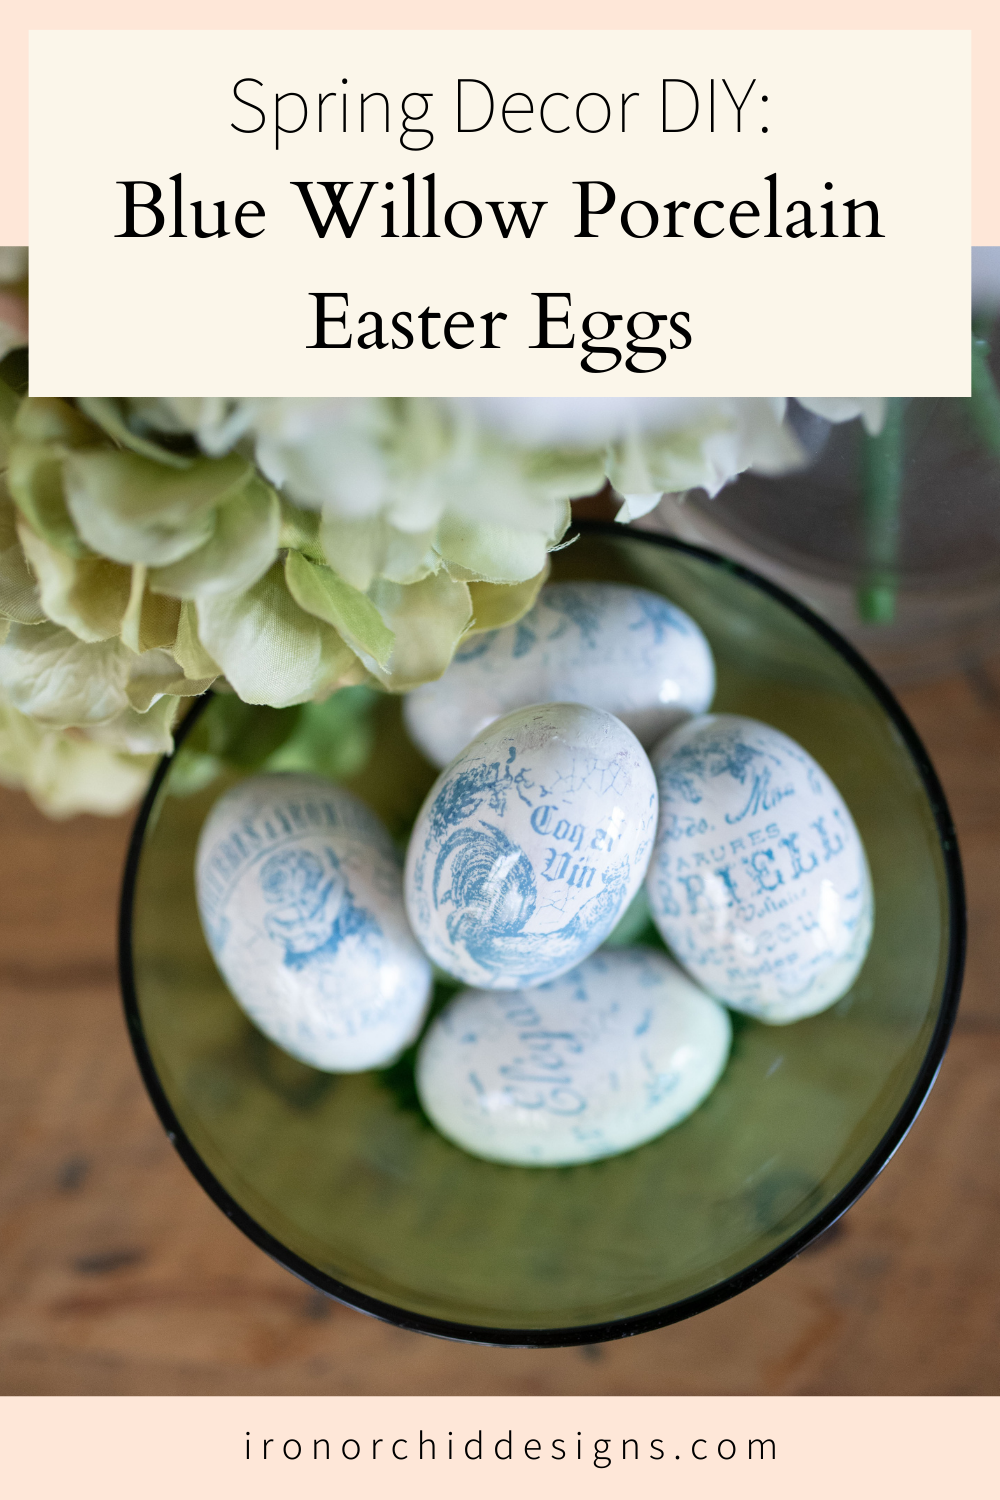 Spring Decor DIY: Blue Willow Porcelain Easter Eggs Pin Cover